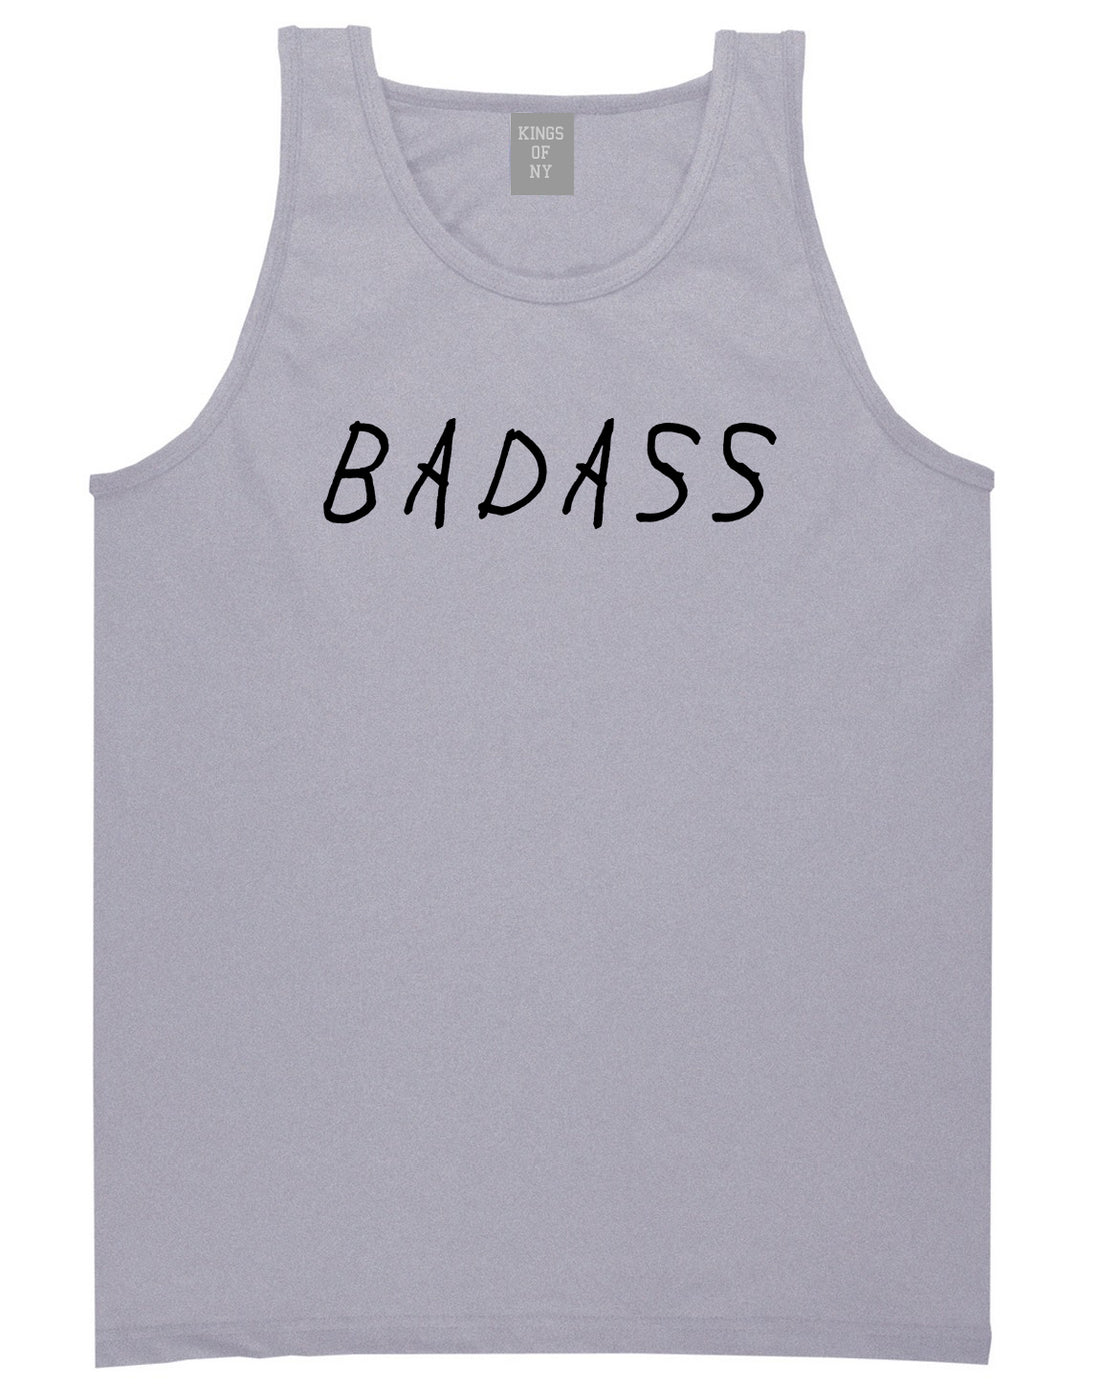 Badass Grey Tank Top Shirt by Kings Of NY